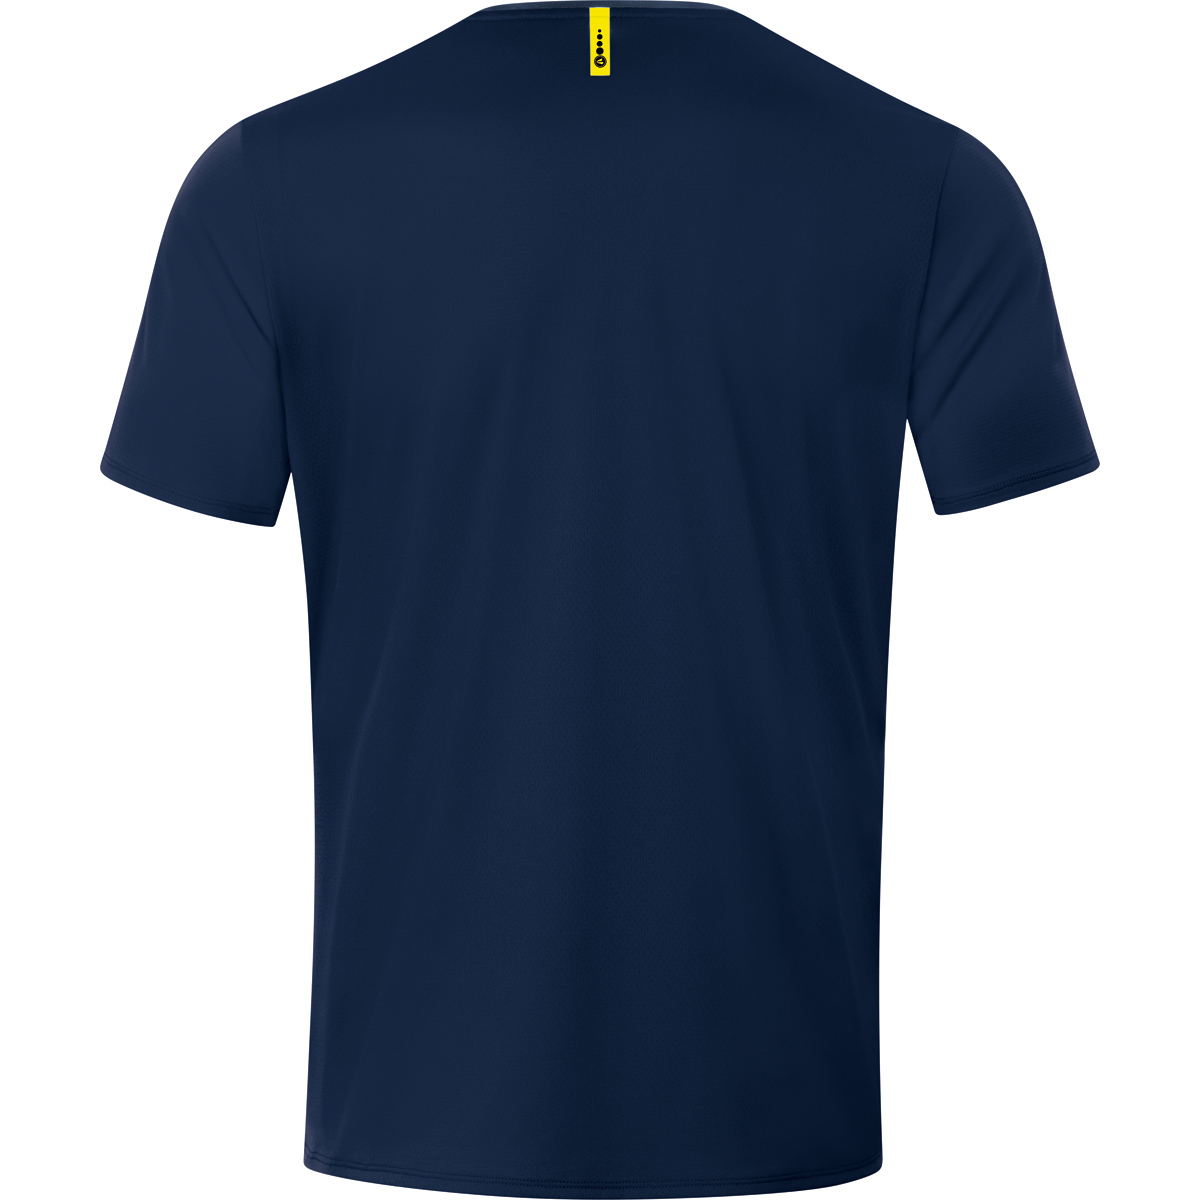 JAKO T-Shirt Herren, marine/darkblue/neongelb, Champ 6120 2.0 M, Gr